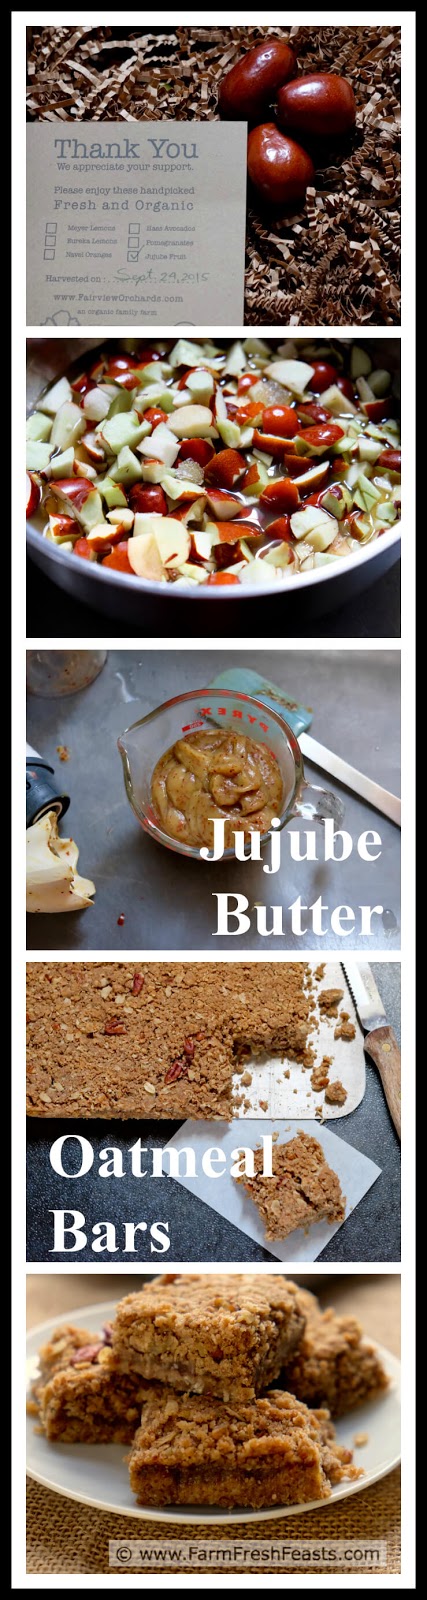 http://www.farmfreshfeasts.com/2015/10/jujube-butter-oatmeal-bars.html